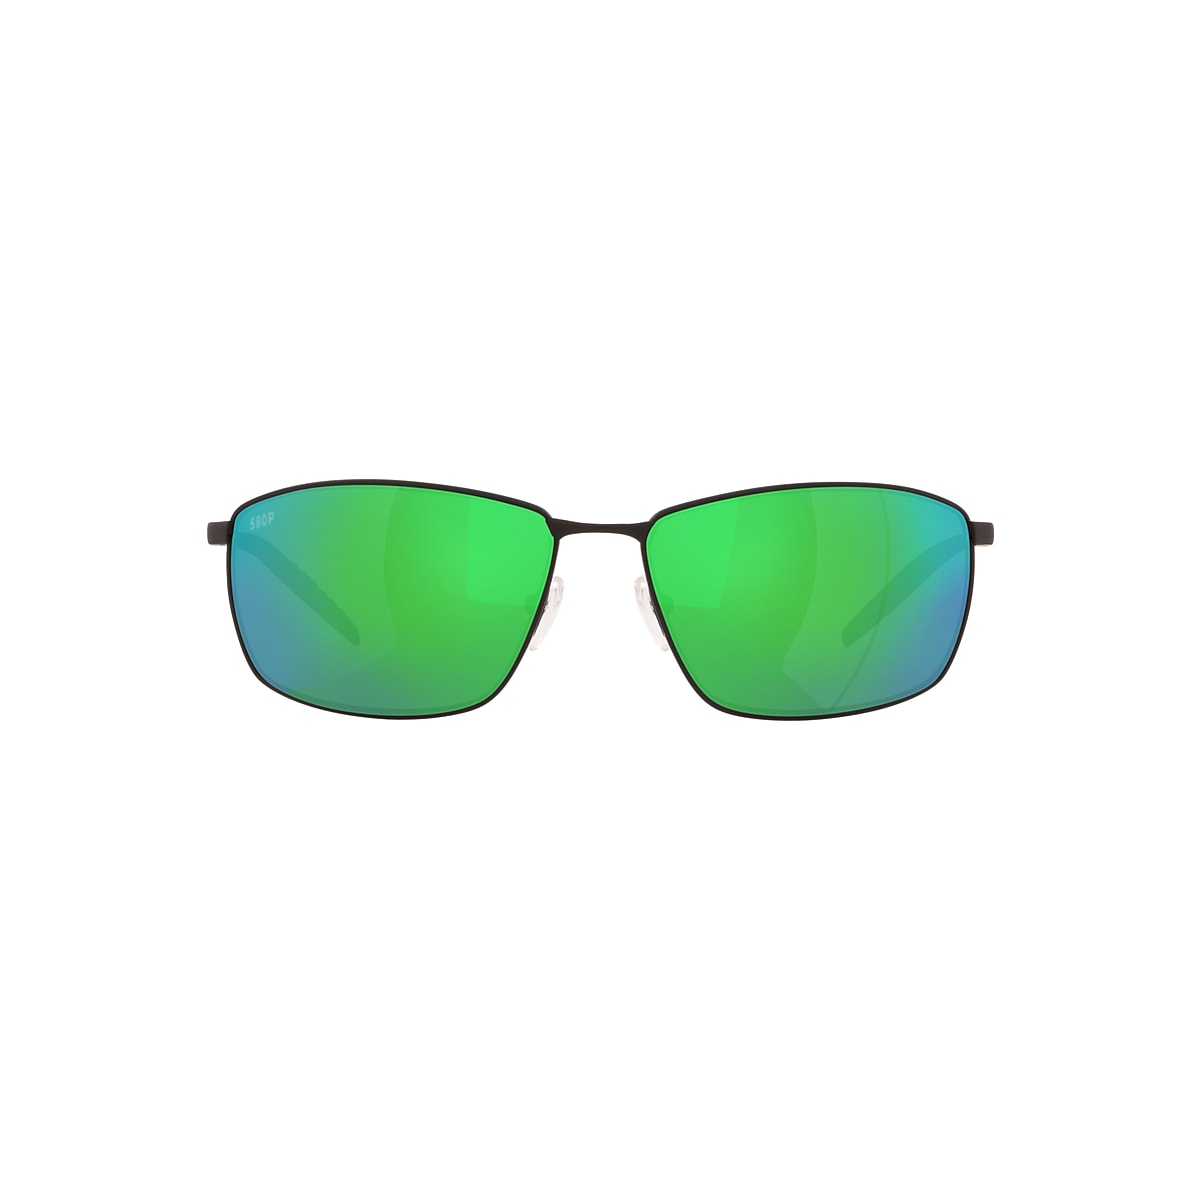 Eyebobs Reva 2747-10 Polarized Sunglasses 4 Option Cateye Green Blue Marble  45mm - Polarized World